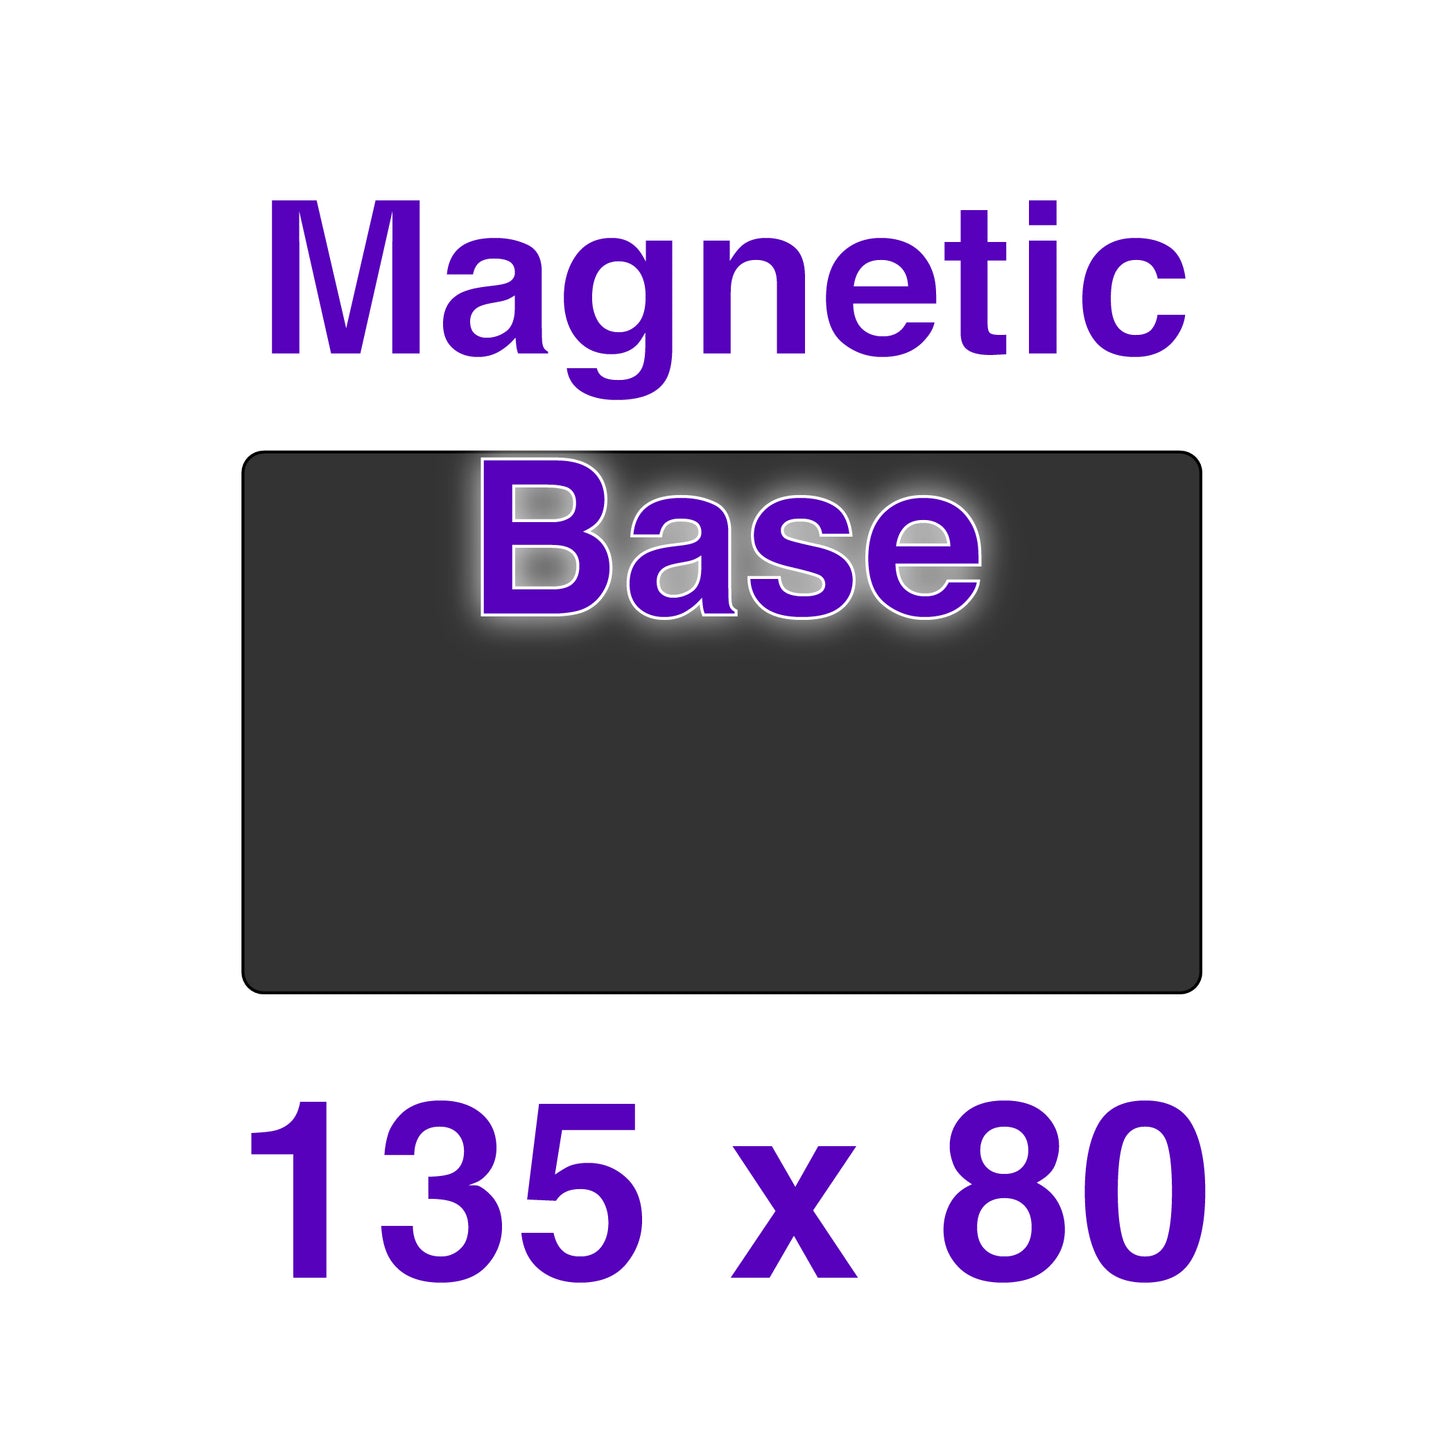 Magnetic Base - 135 x 80